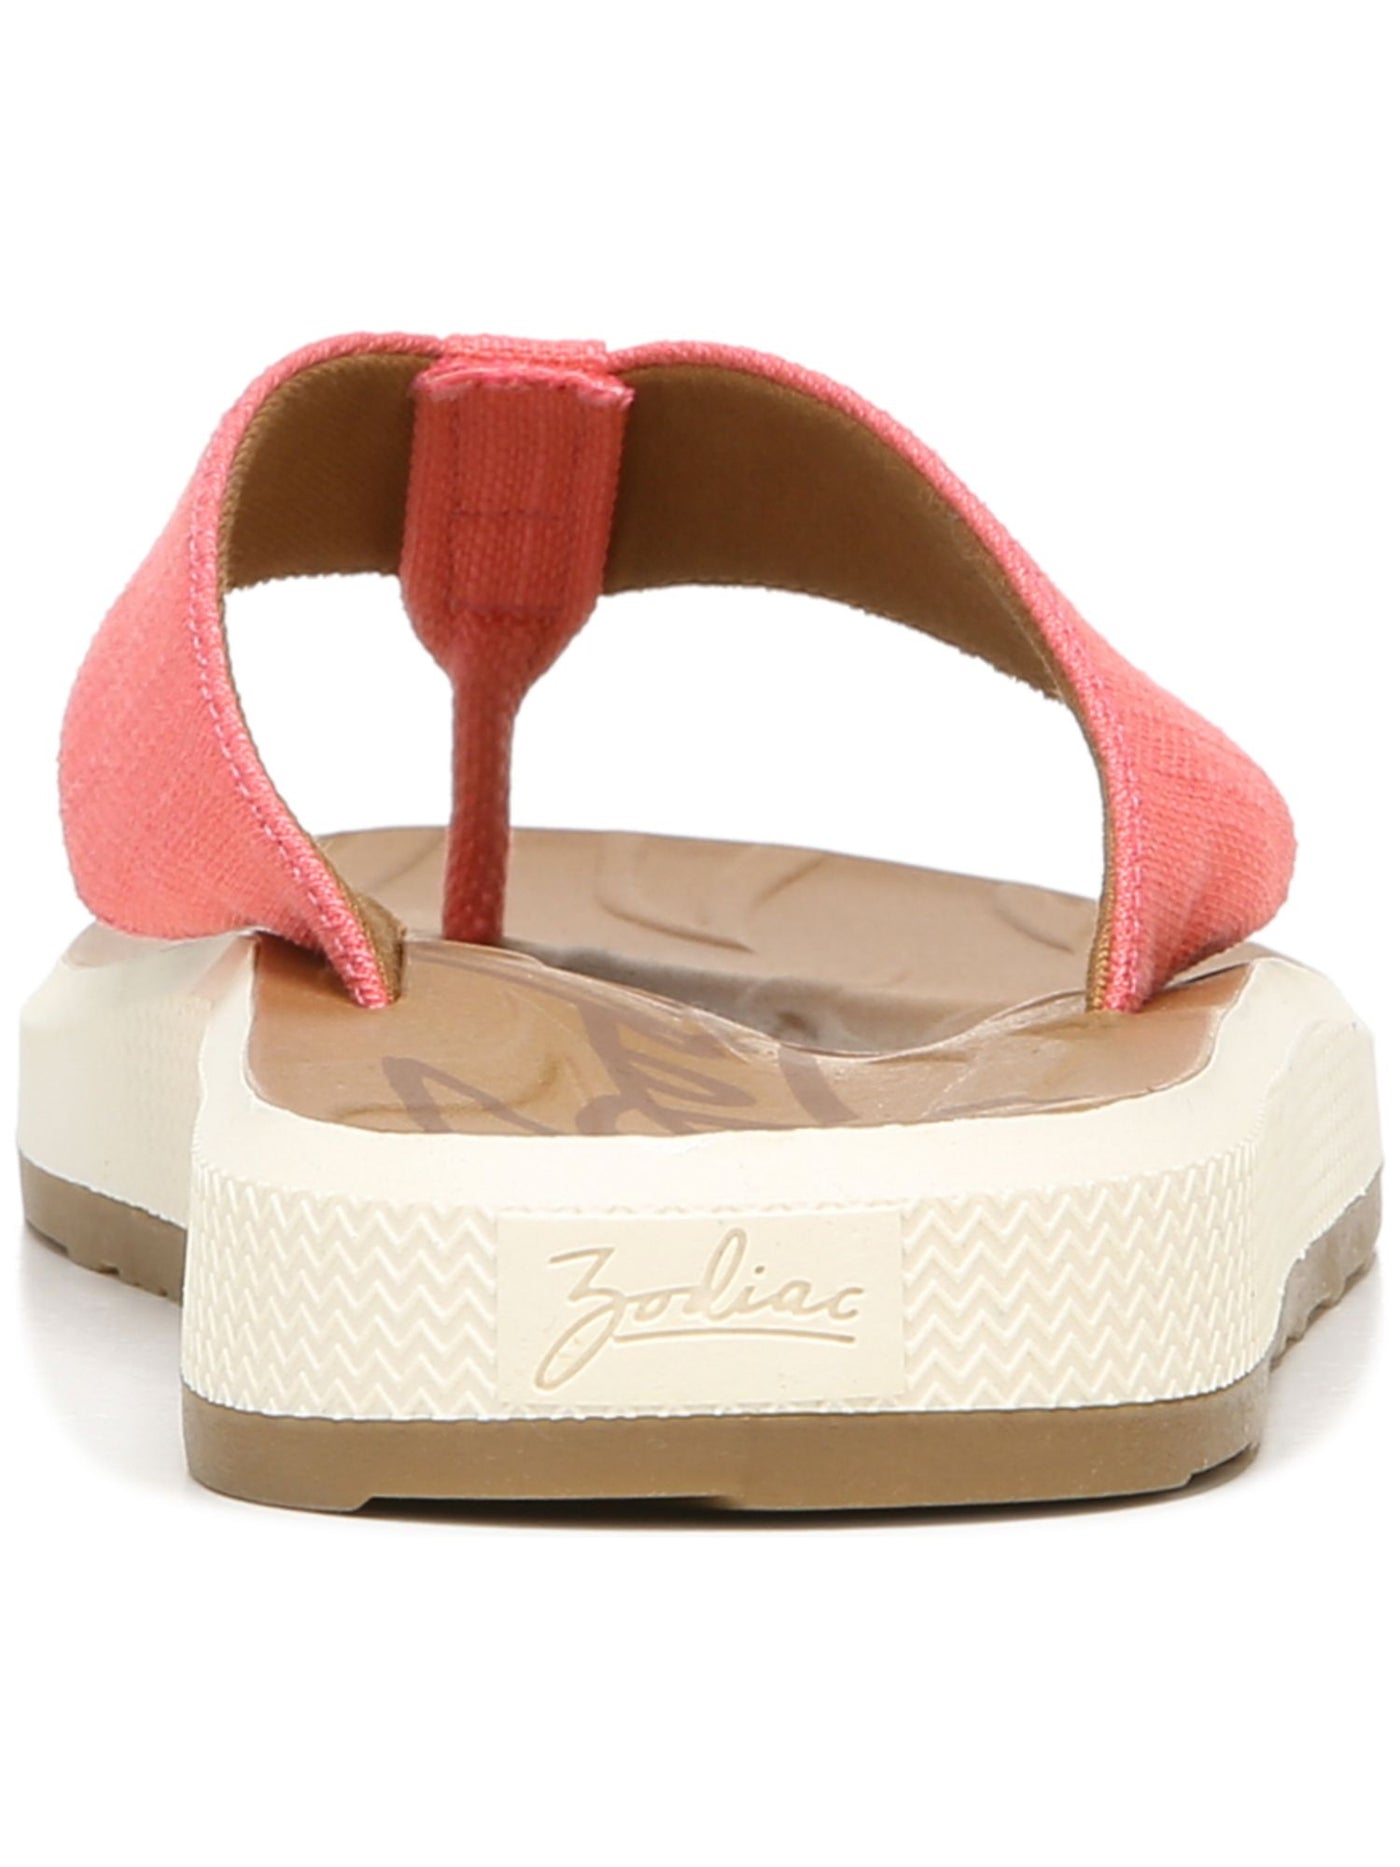 ZODIAC Womens Pink 1/2" Platform Comfort Sunny Round Toe Wedge Slip On Flip Flop Sandal 10 M